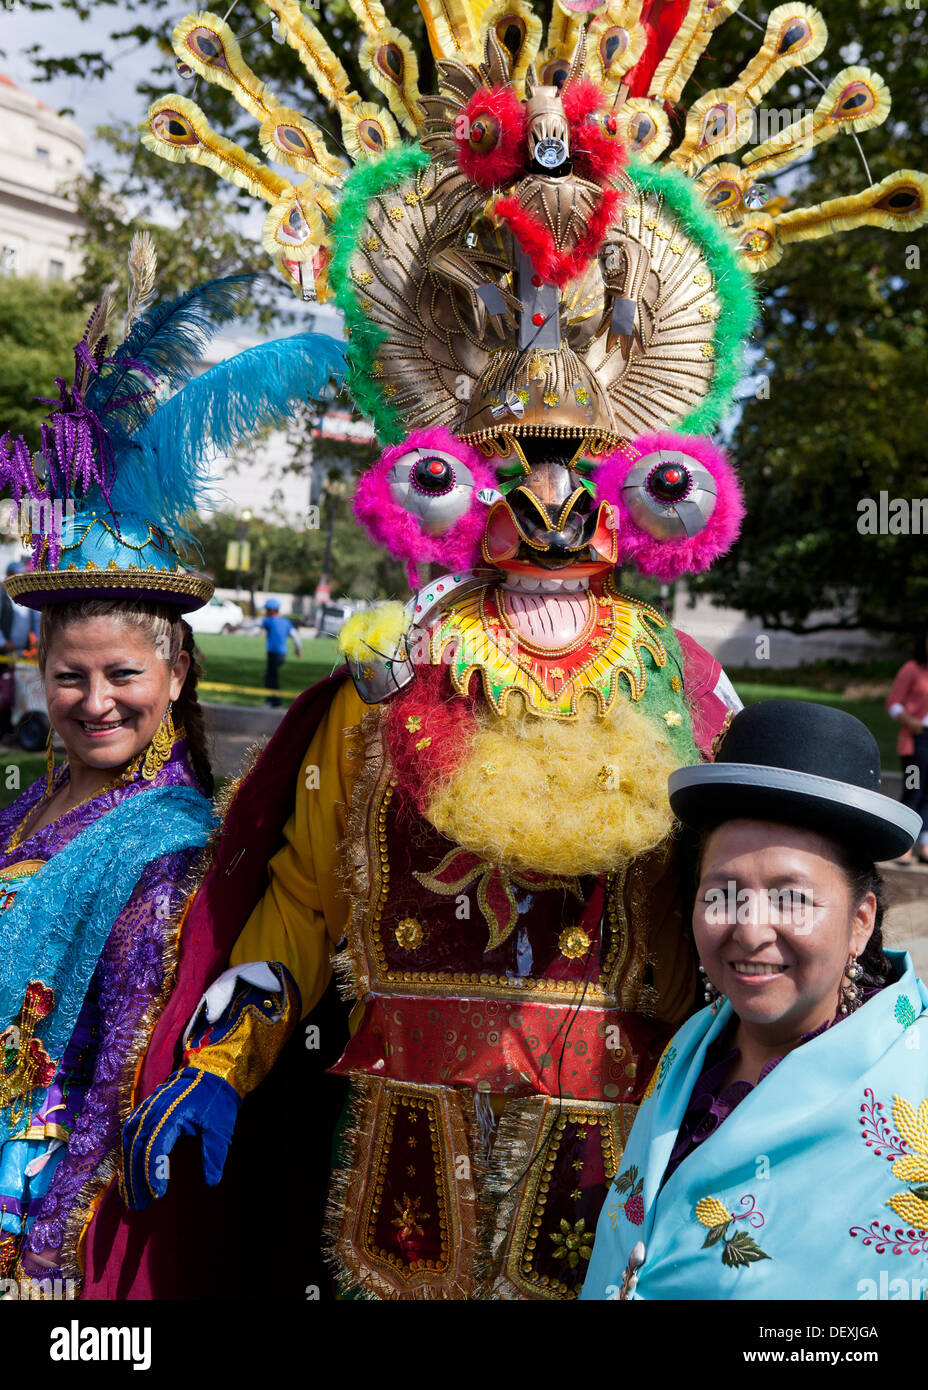 Traditional Bolivian dancers in costume at Latino Festival - Washington, DC USA Stock Photo